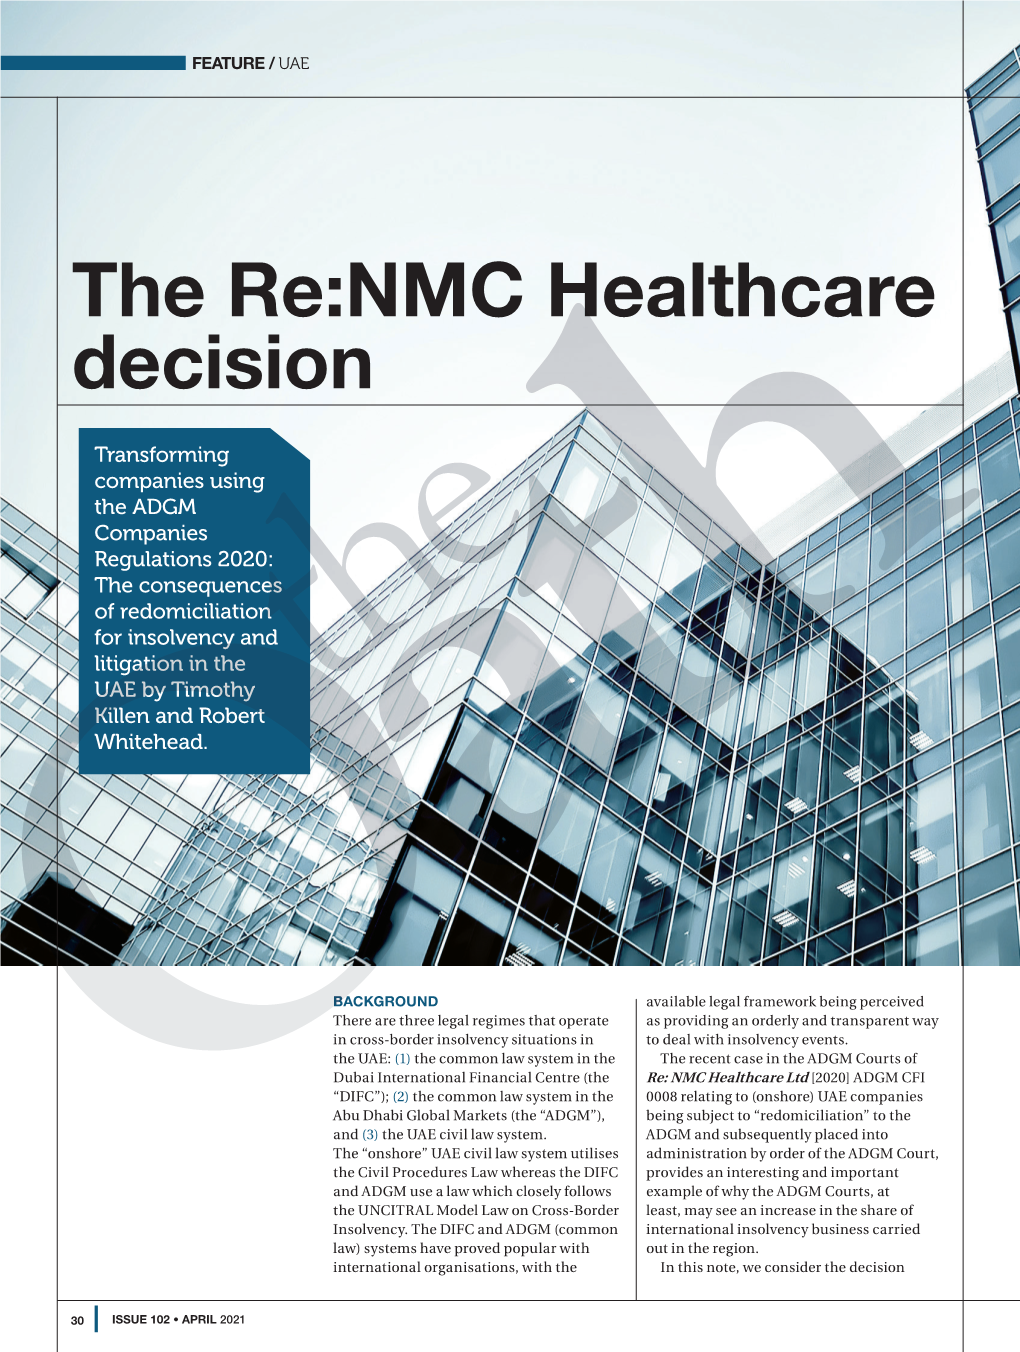 The Re:NMC Healthcare Decision